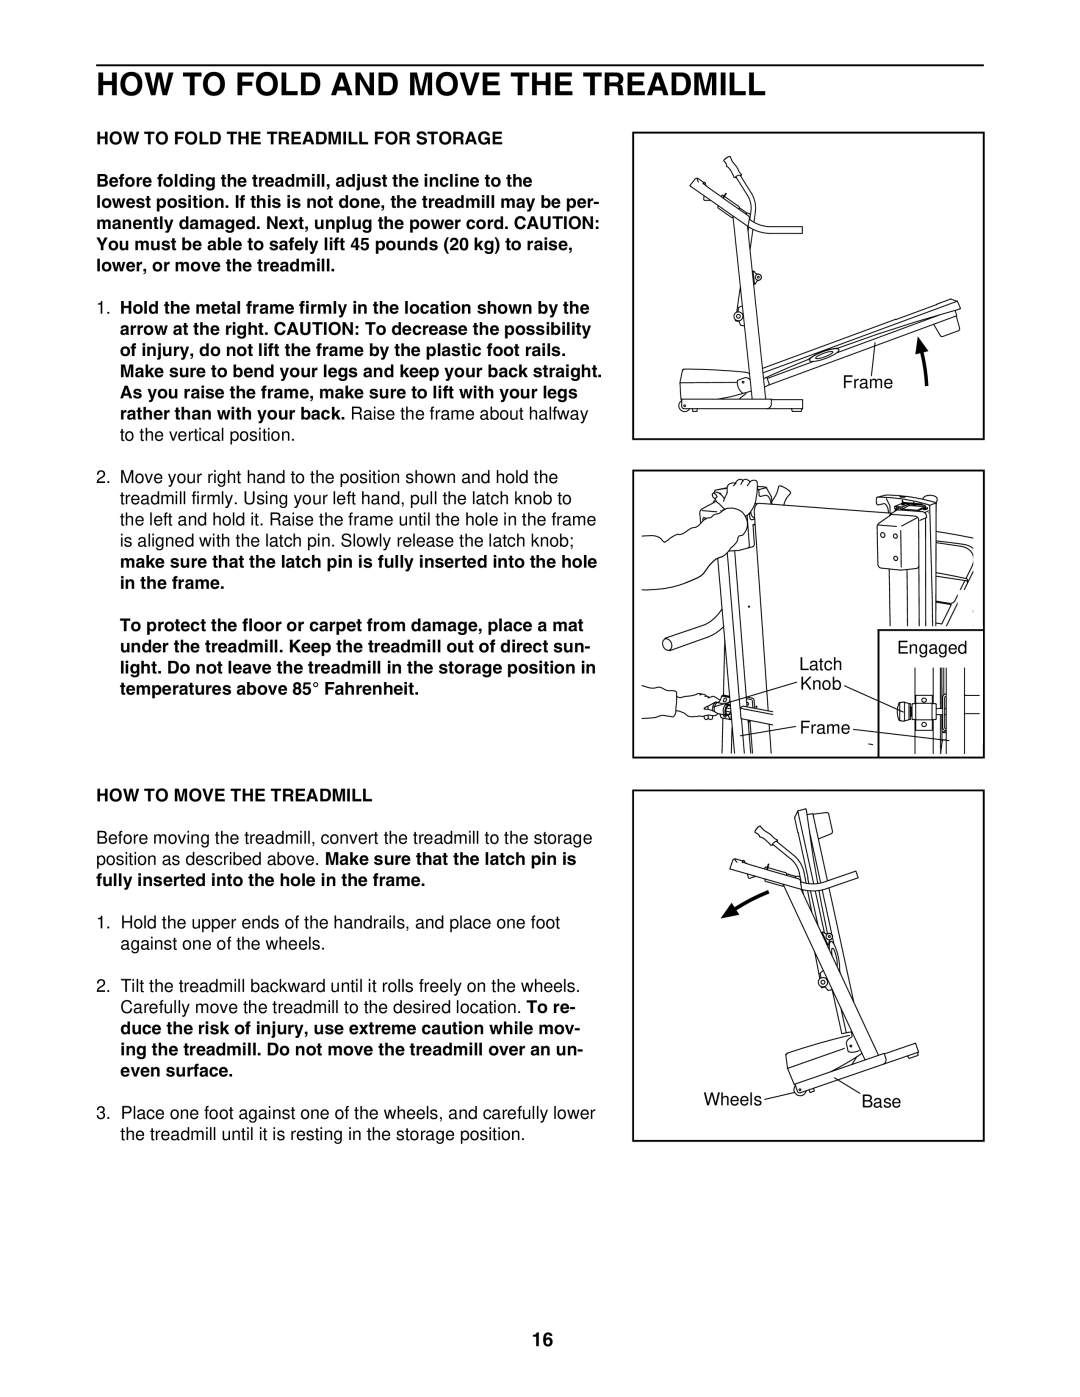 ProForm 831.24623.0 HOW to Fold and Move the Treadmill, HOW to Fold the Treadmill for Storage, HOW to Move the Treadmill 